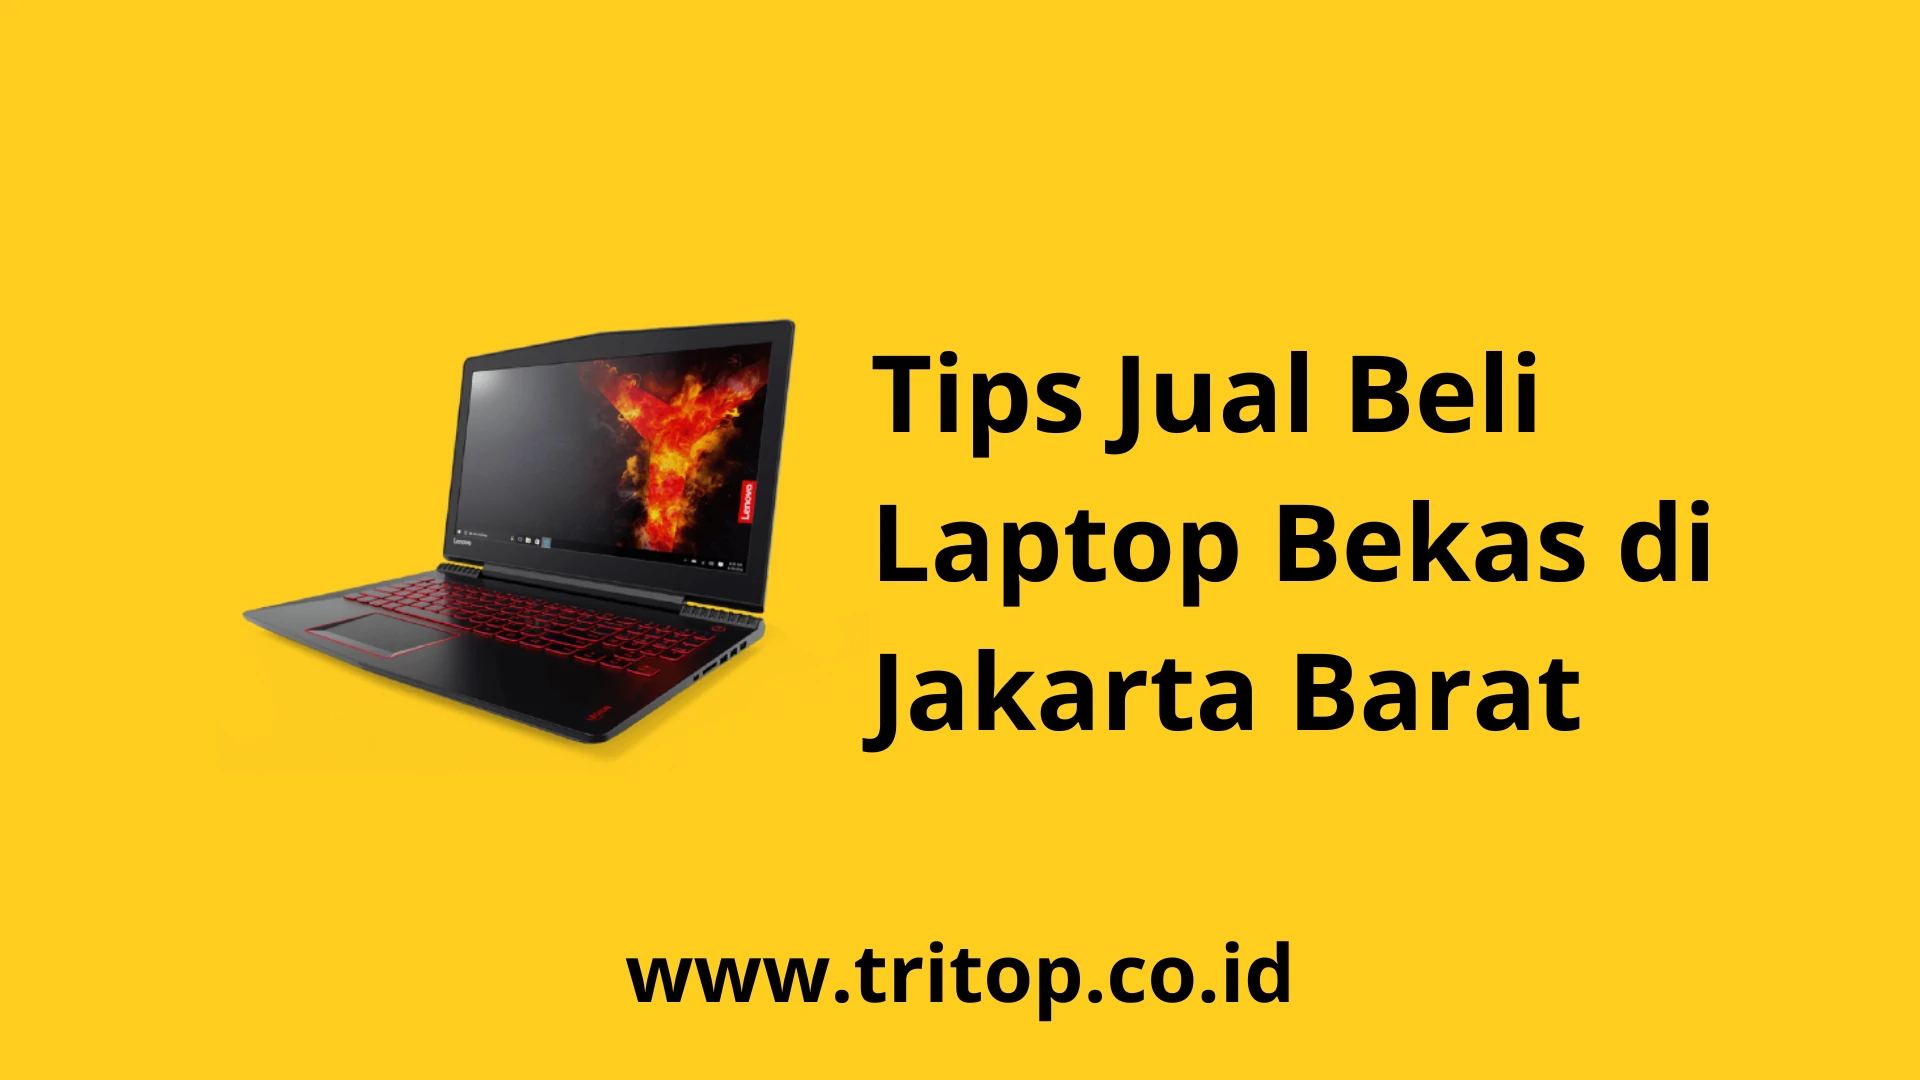 Jual Beli Laptop Bekas Jakarta Barat Tritop.co.id